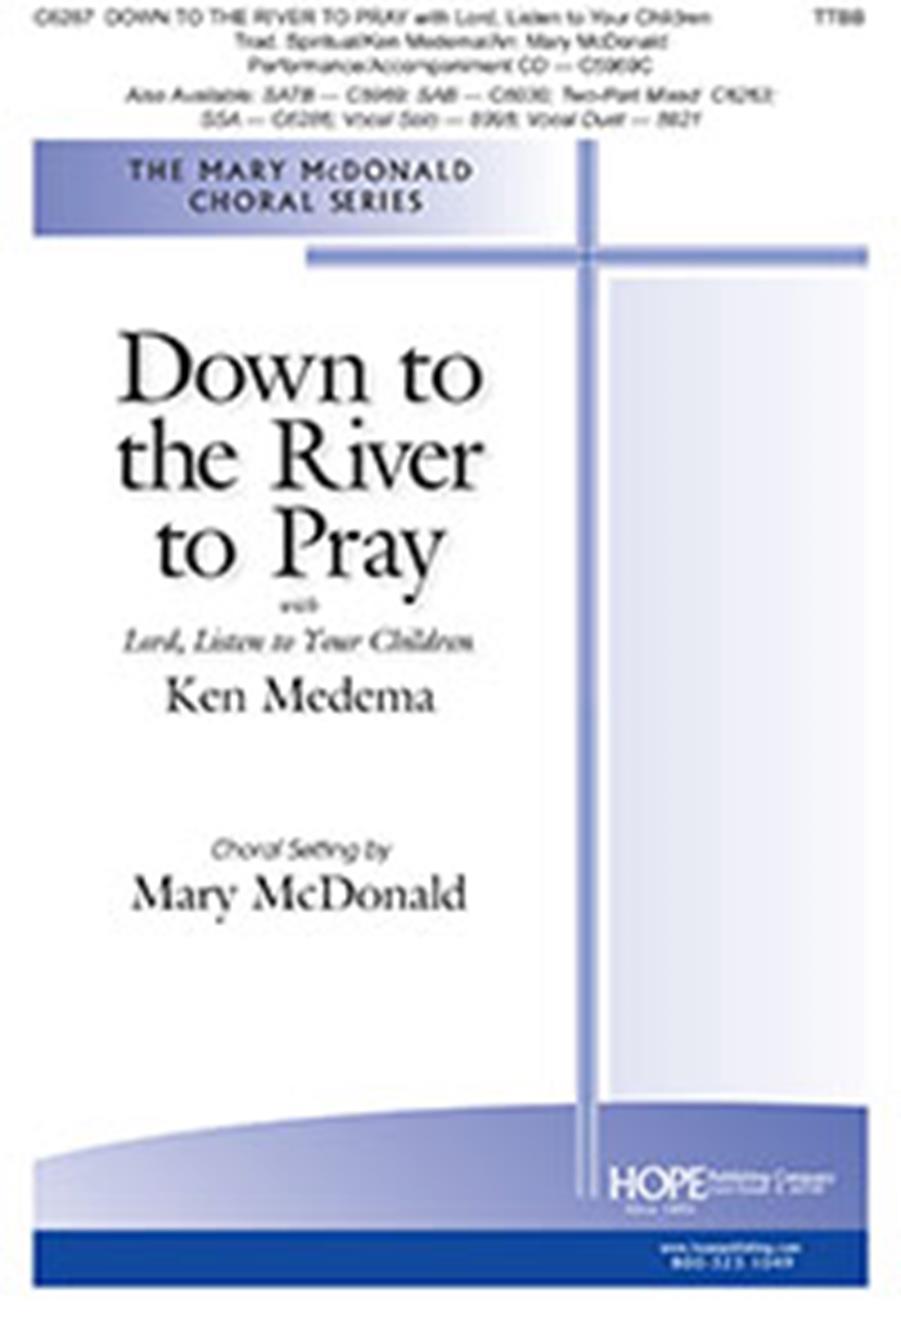 Ken Medema: Down to the River to Pray: TTBB: Vocal Score